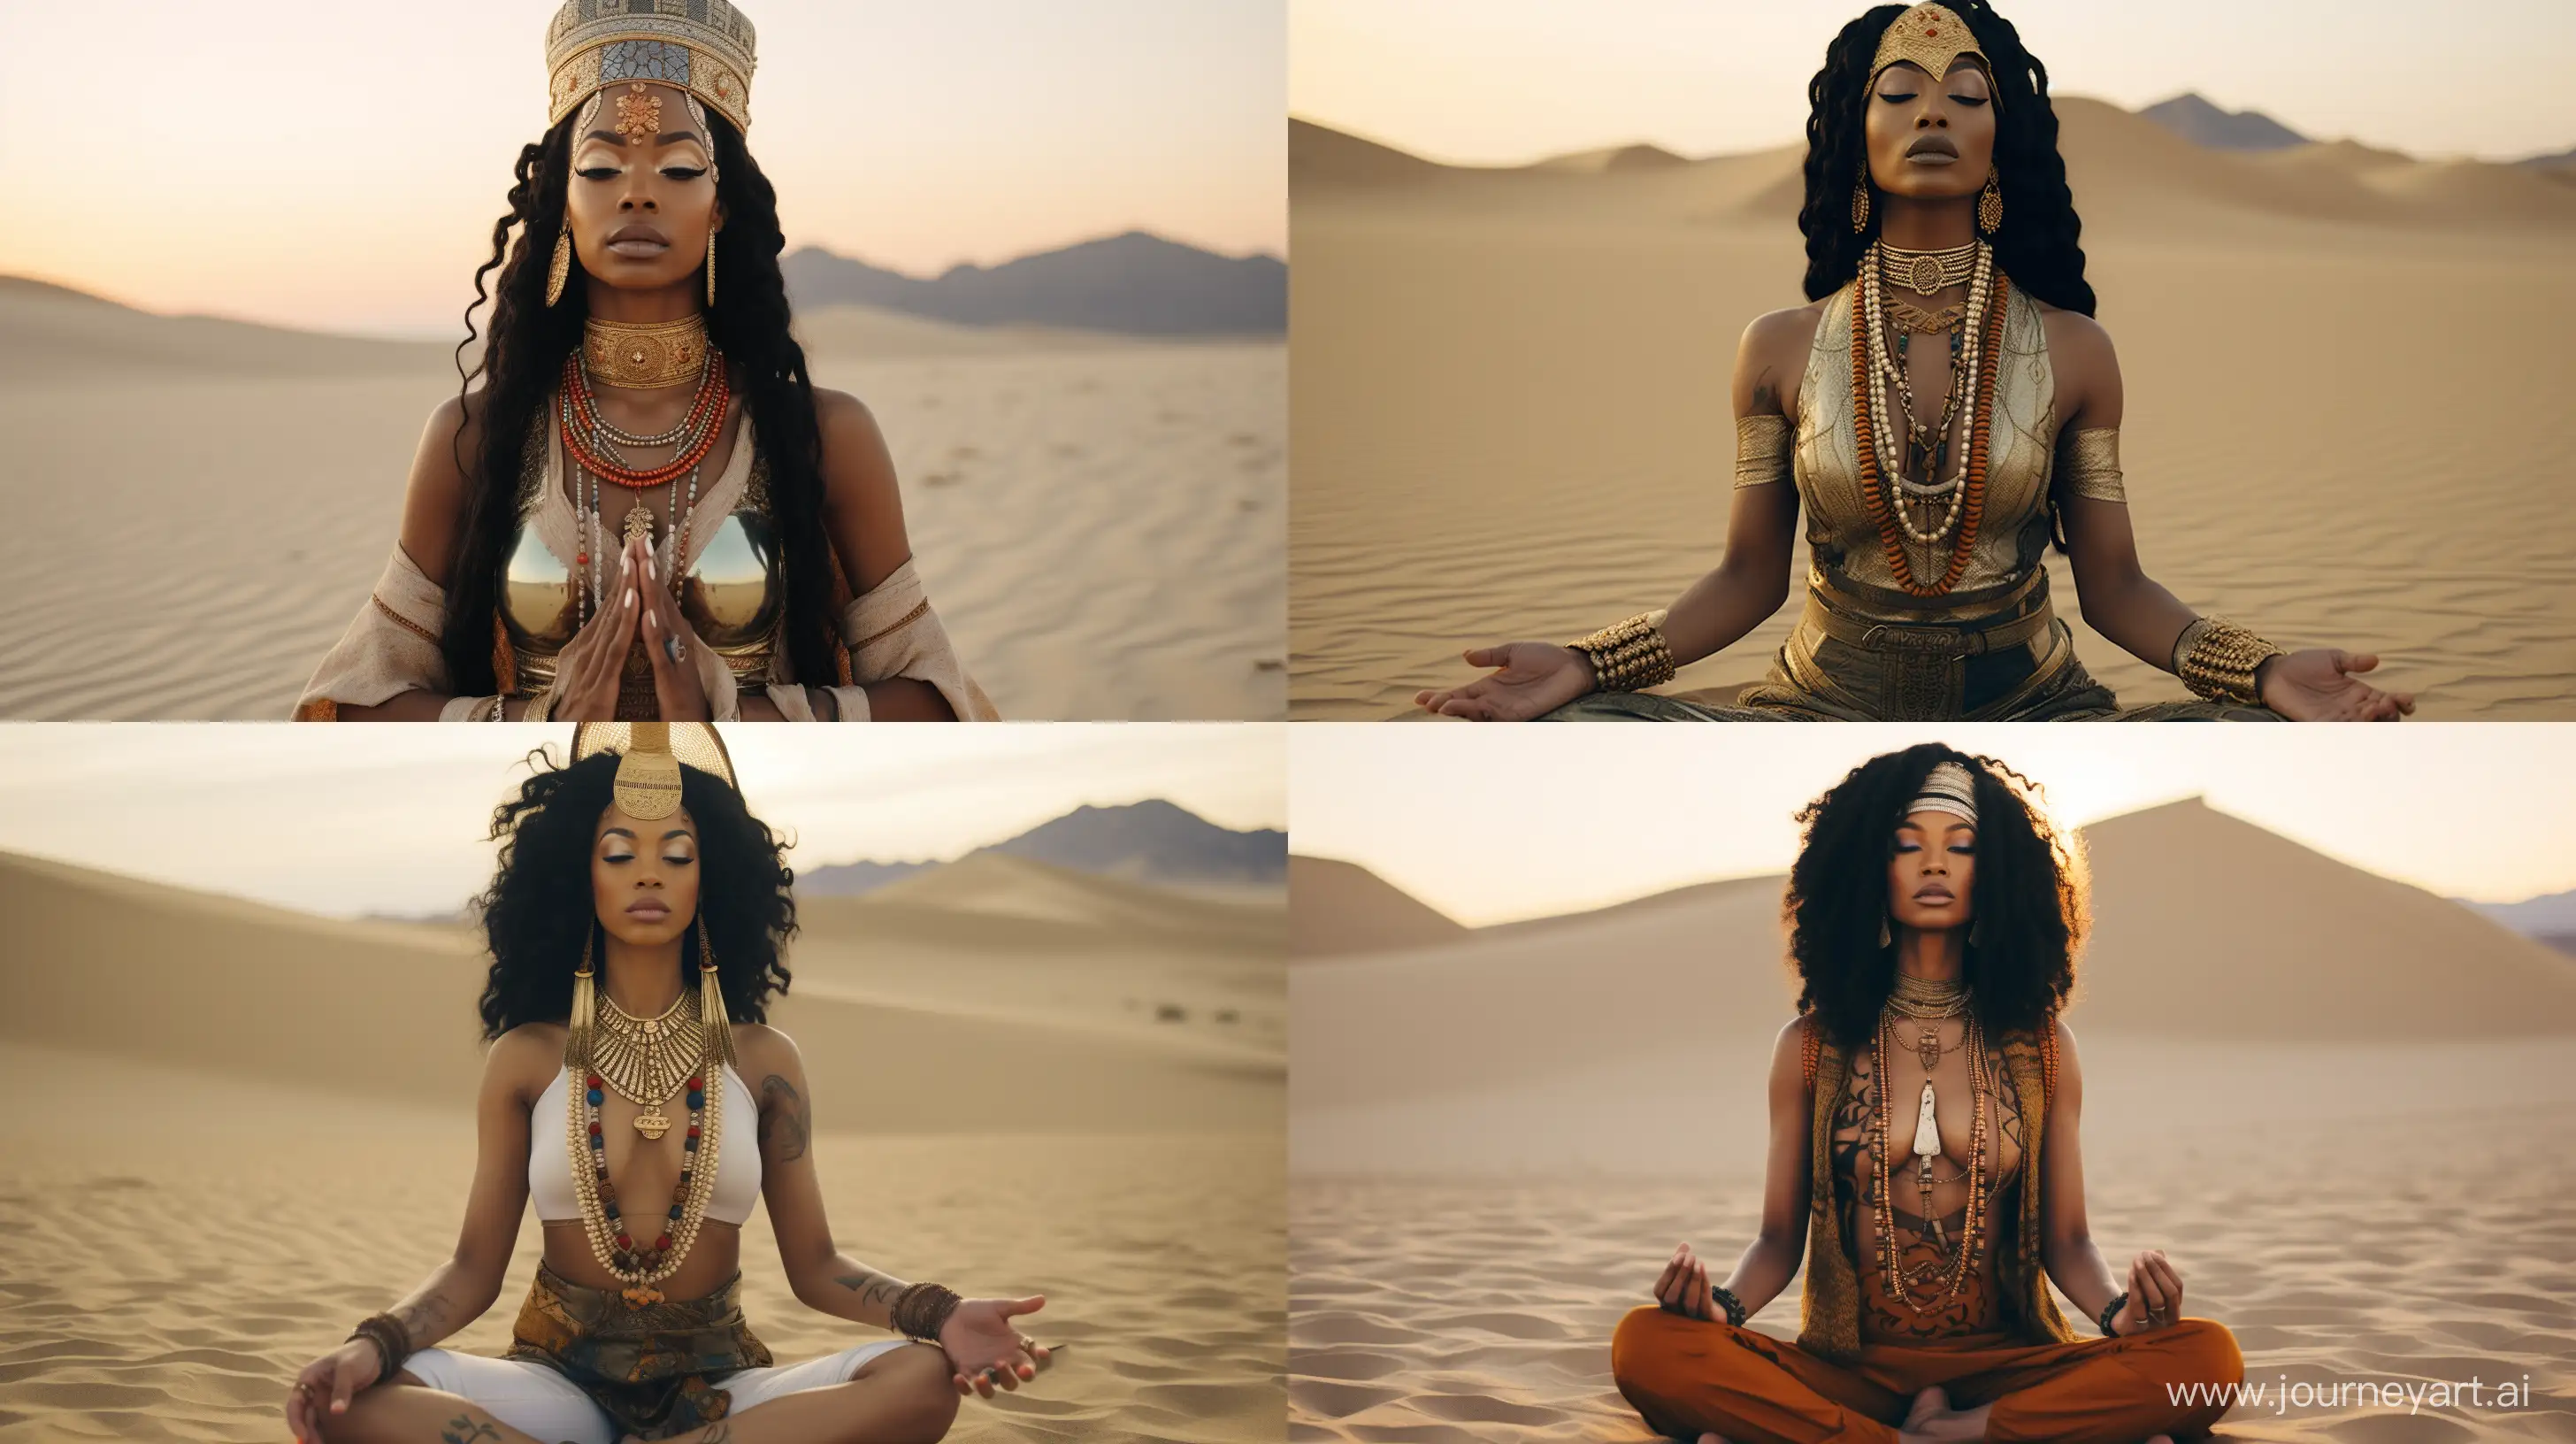 African-Woman-in-Korean-Attire-Meditating-in-Desert-with-Rap-Aesthetics